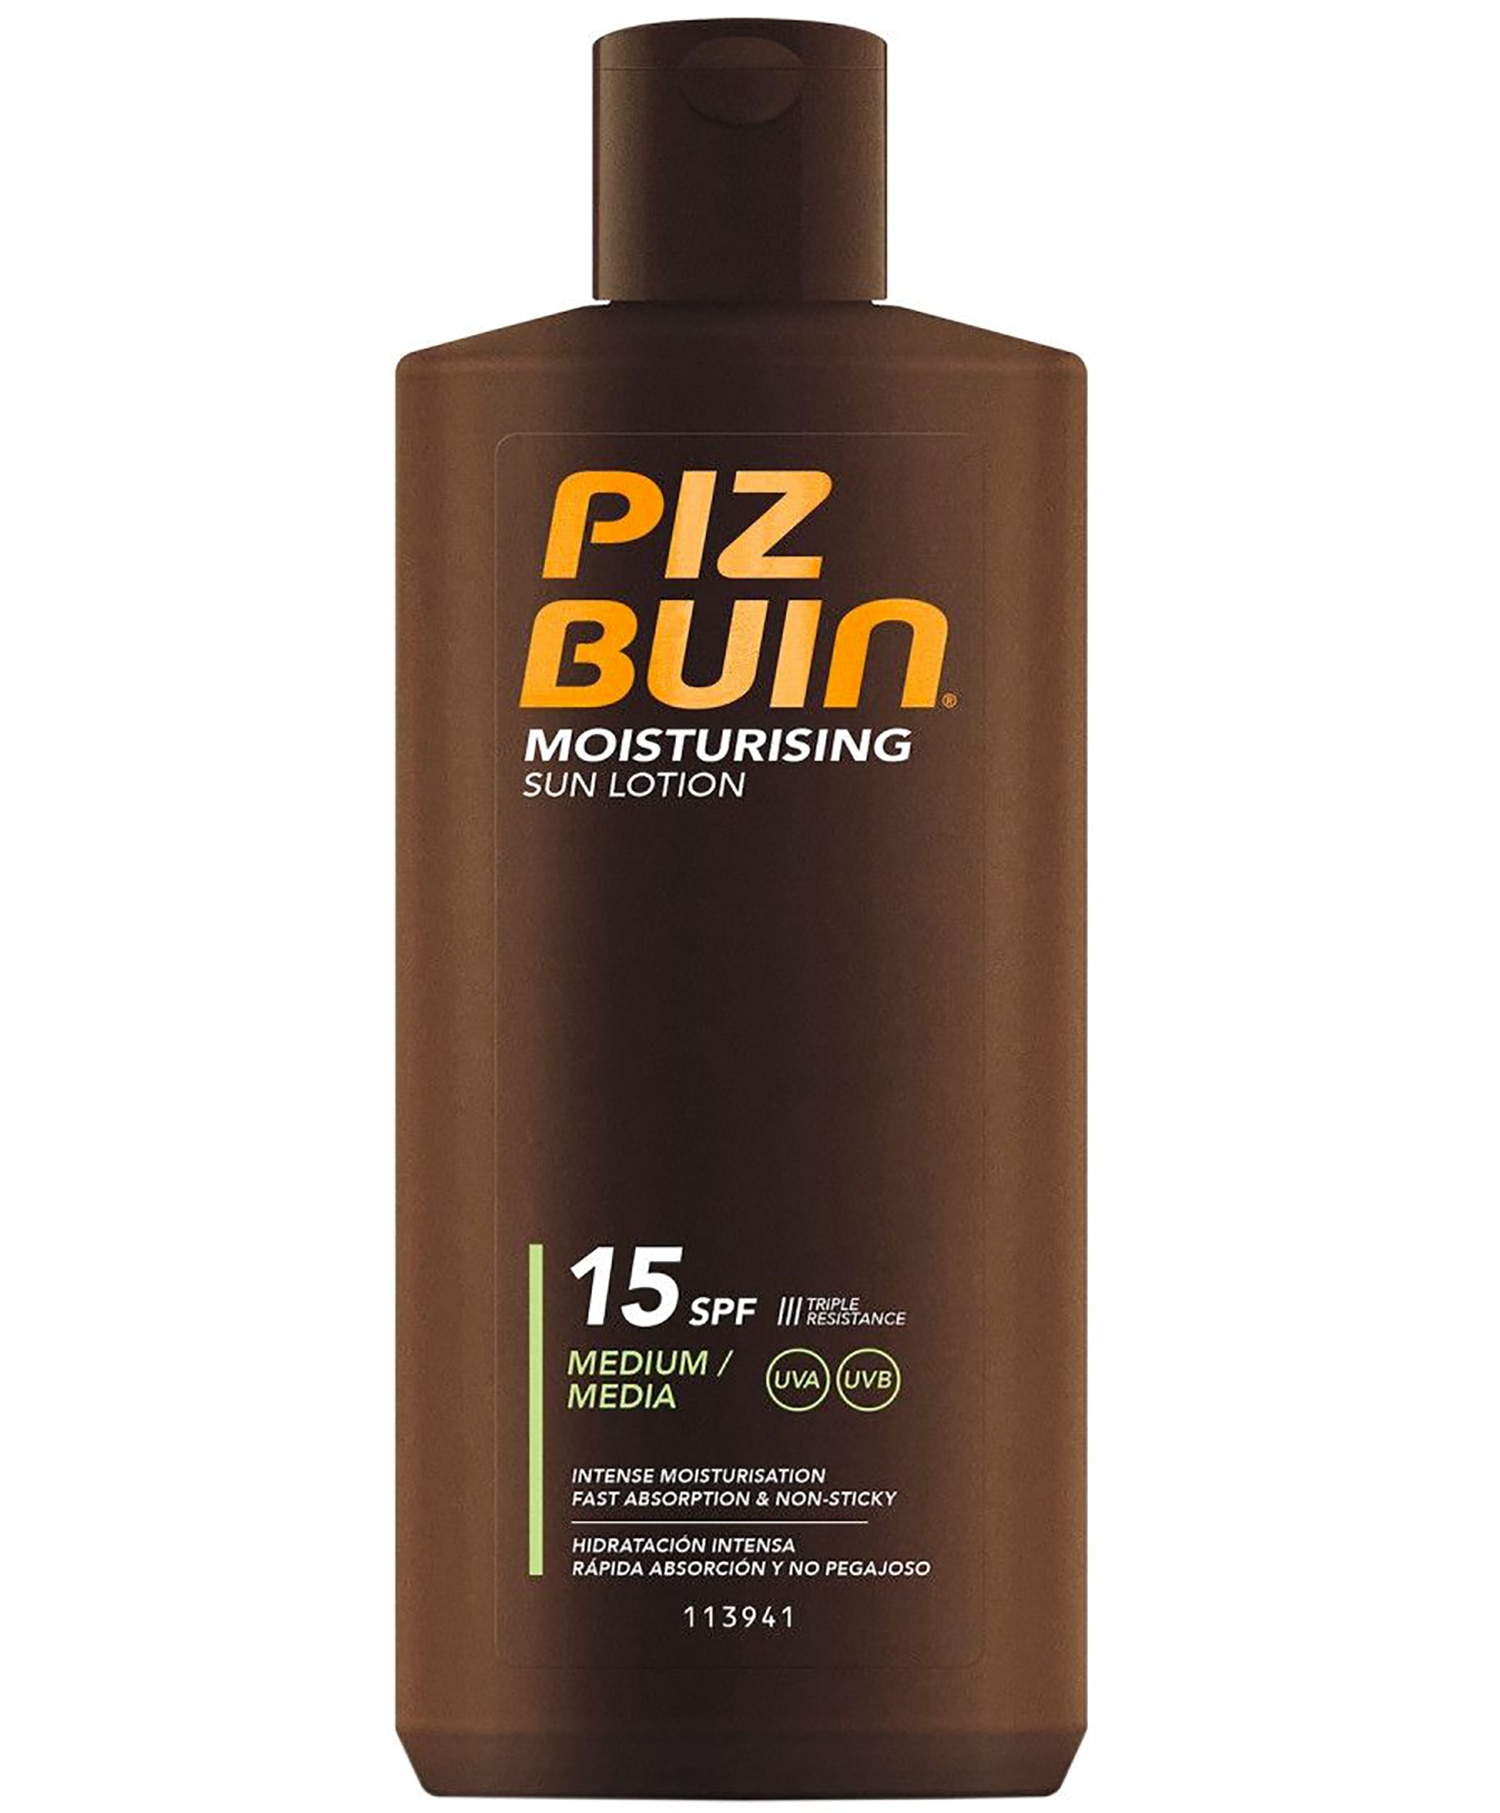 PizBuin Moisturizing SunLotion SPF15